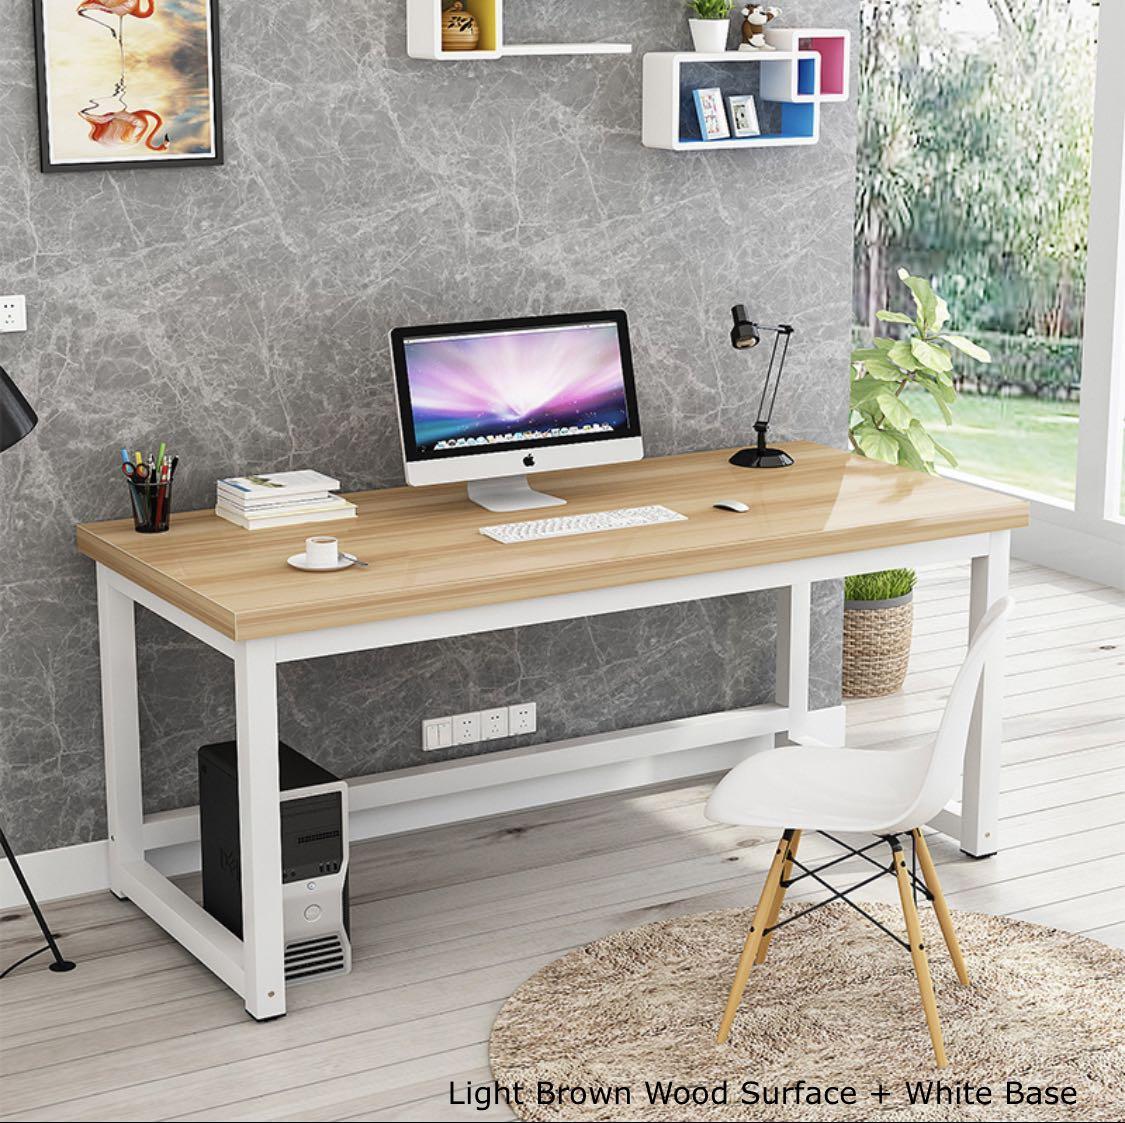 Ktaxon Wood Computer Desk PC Laptop Study Table Workstation Home